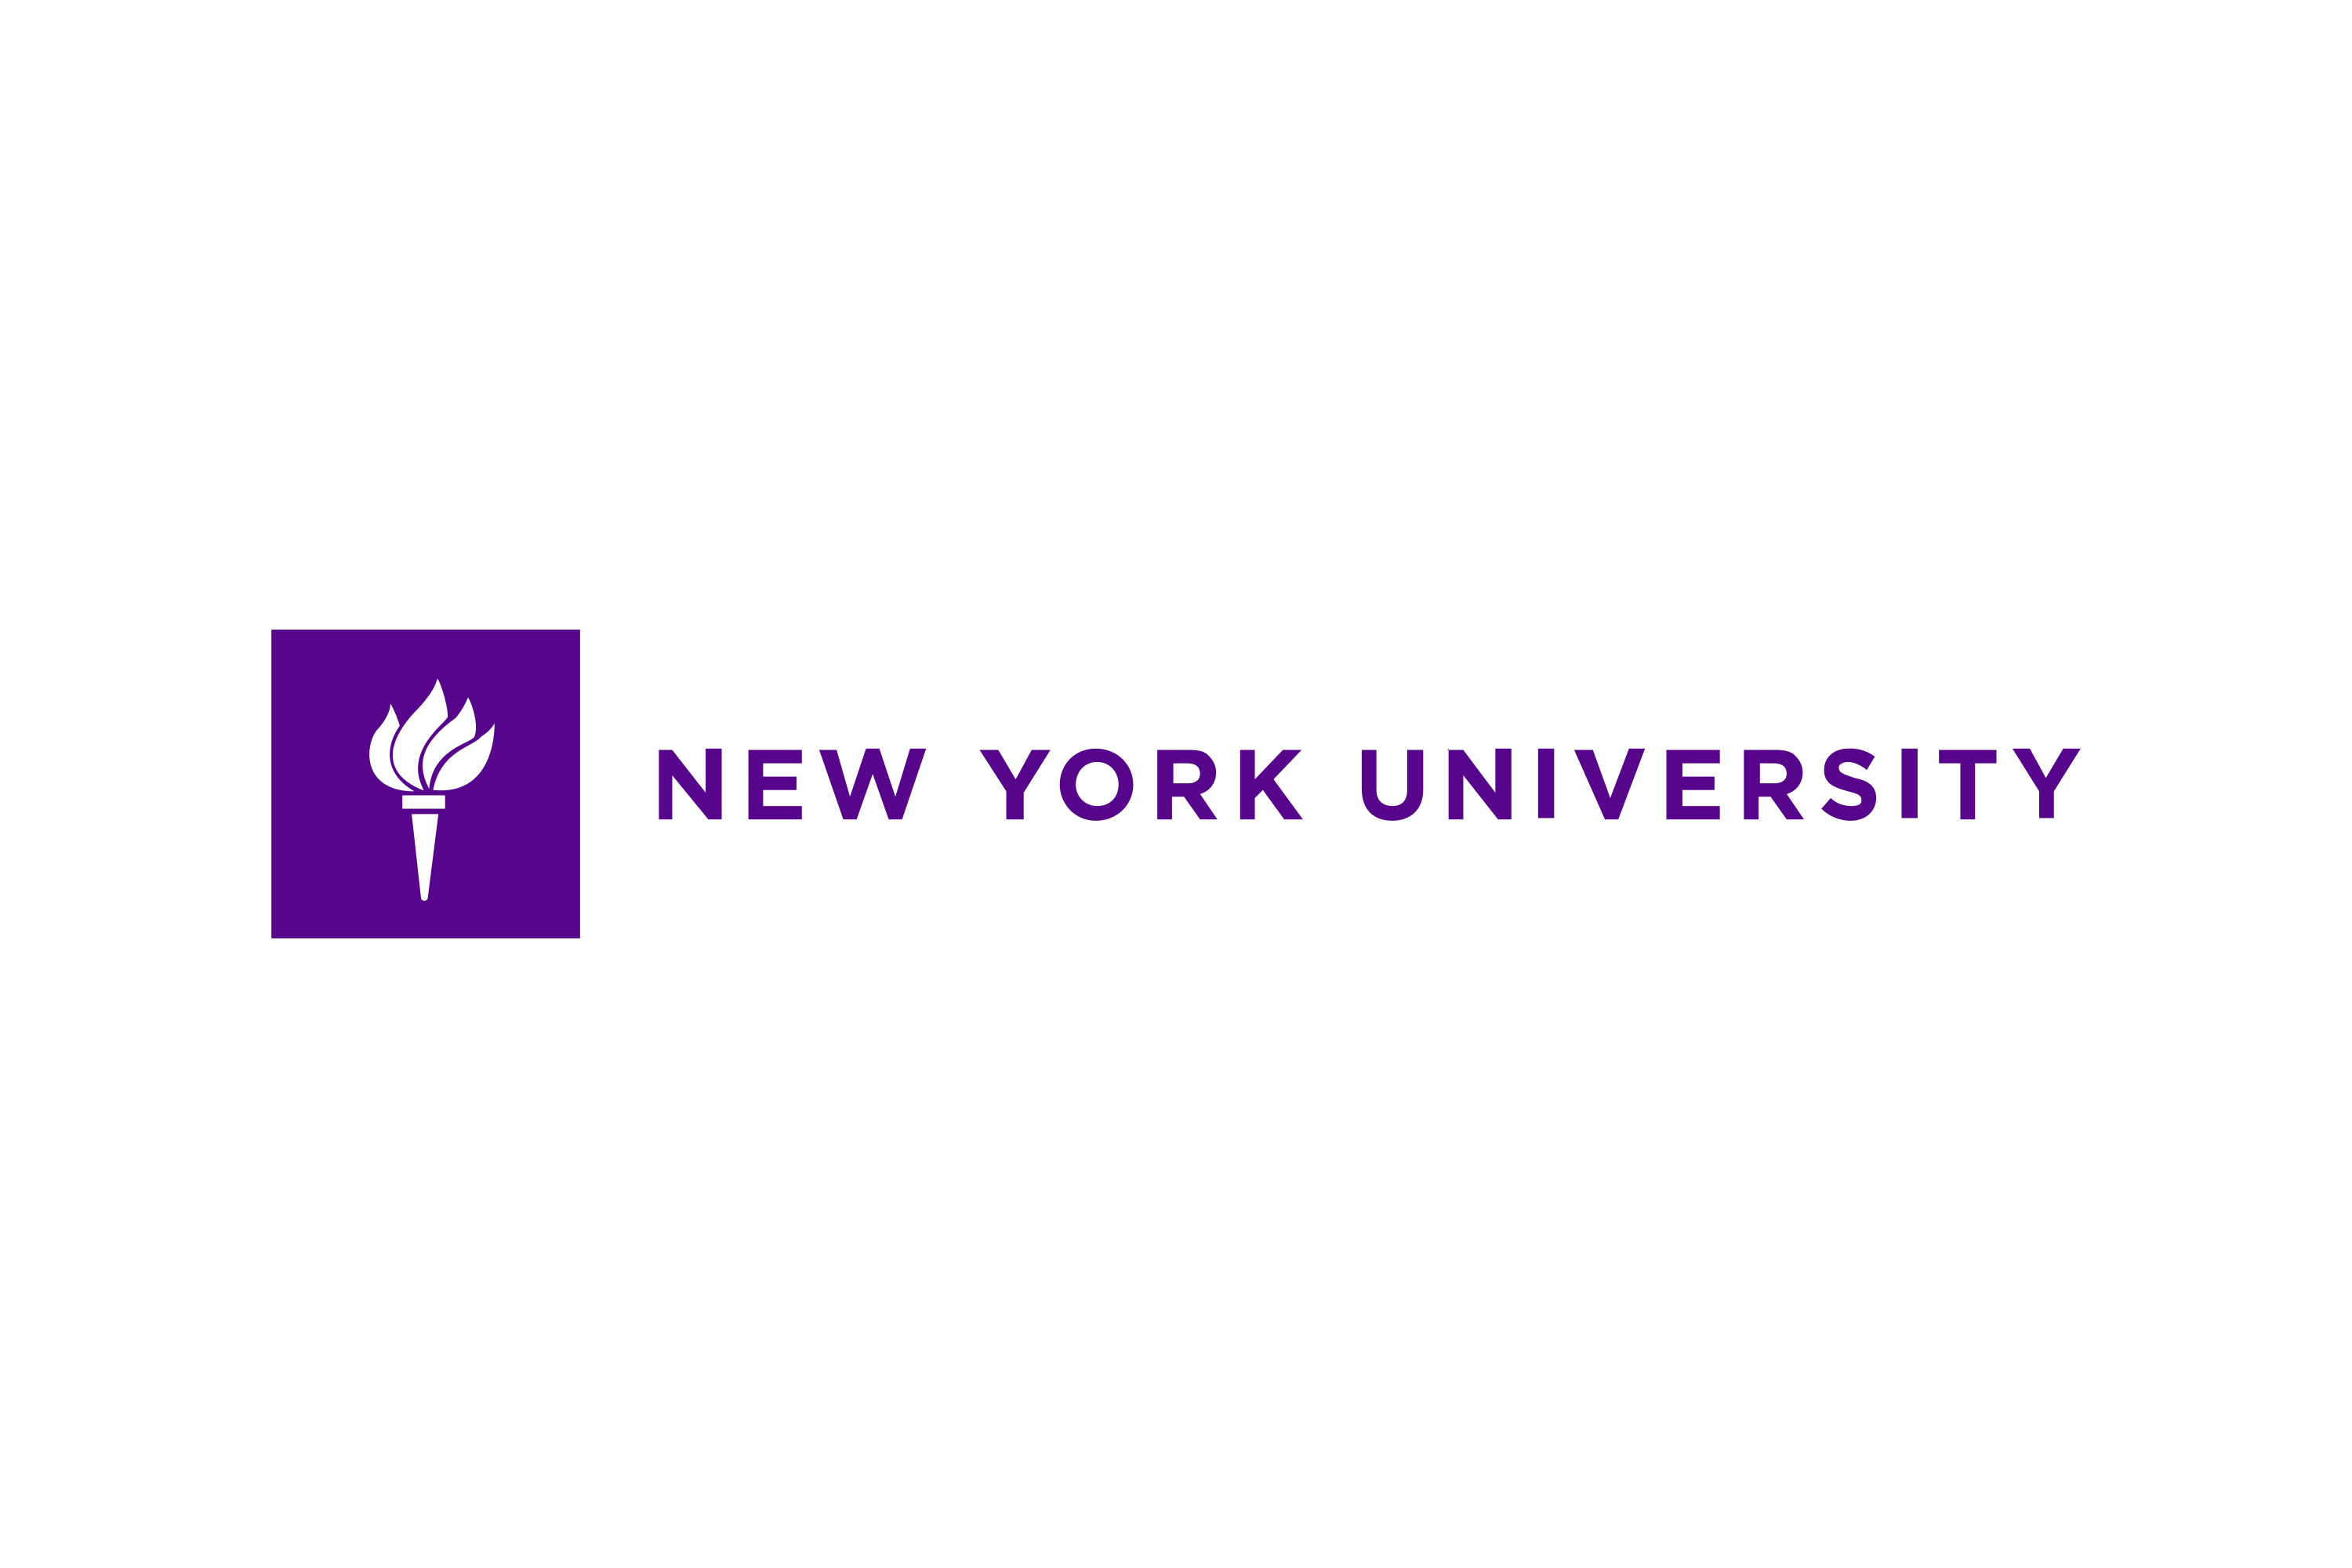 Download New York University (NYU) Logo in SVG Vector or PNG File Format - Logo.wine